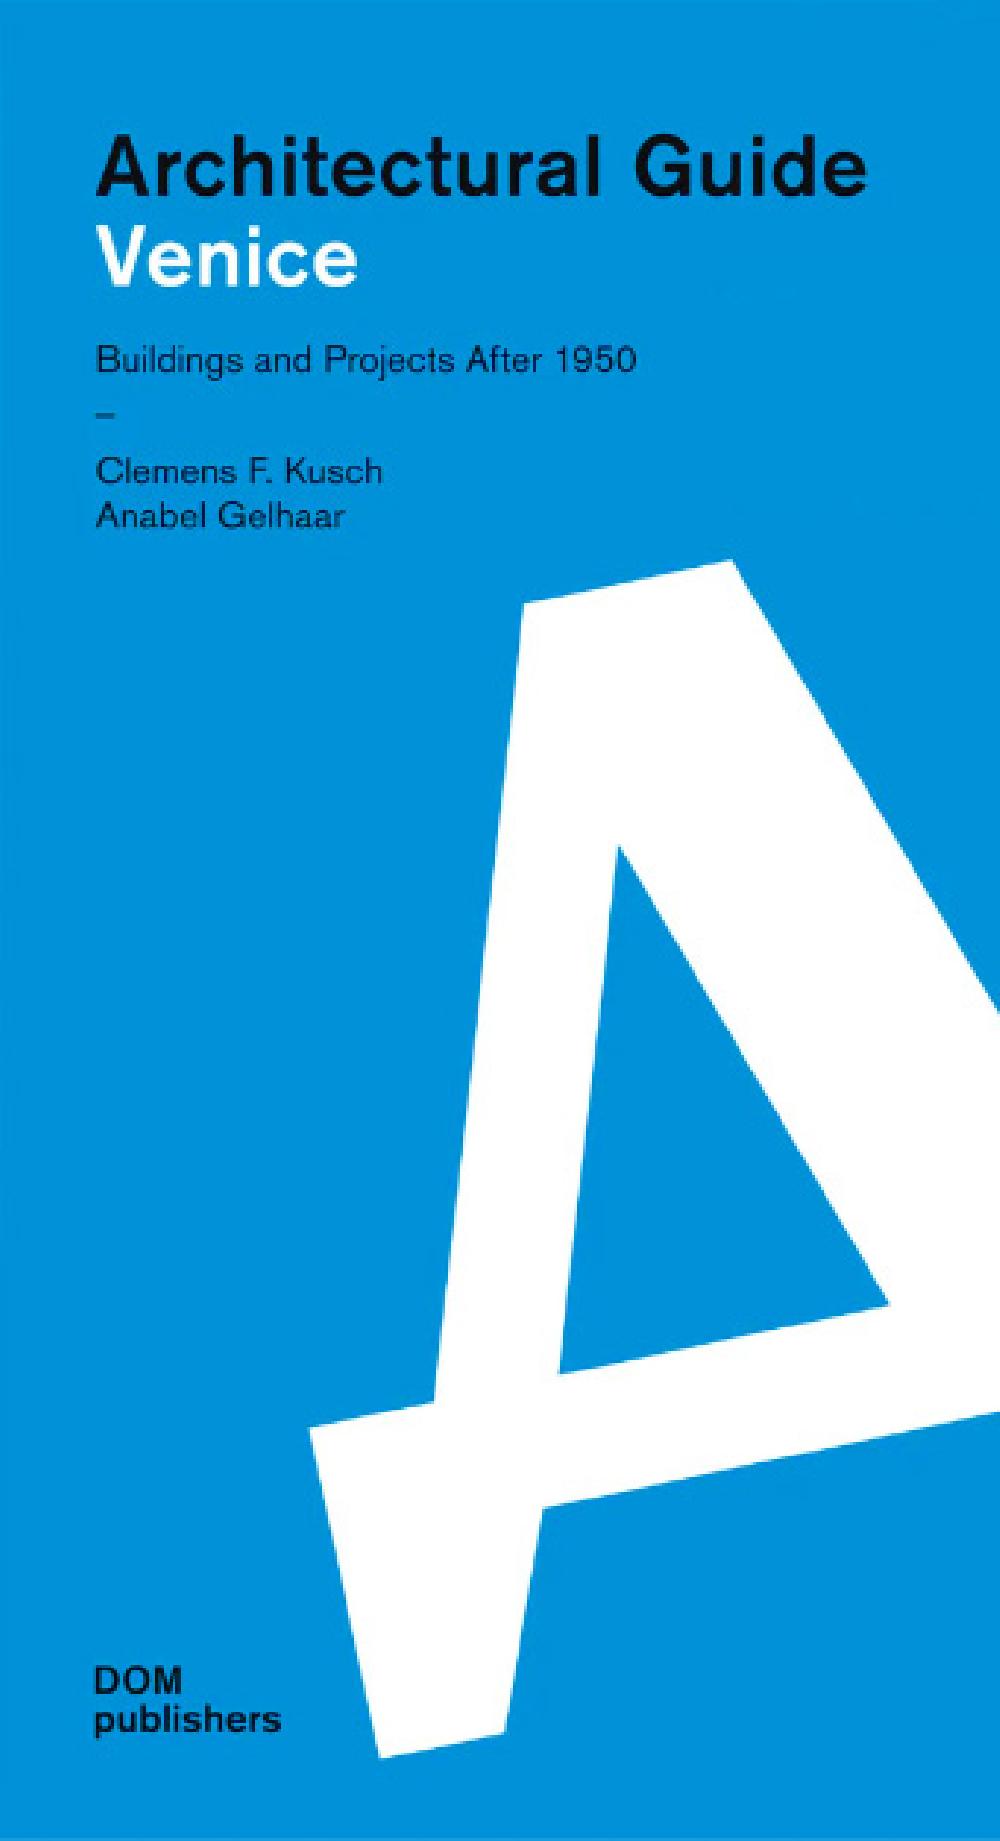 VENICE - Architectural Guide - Clemens F. Kusch - Anabel Gelhaar